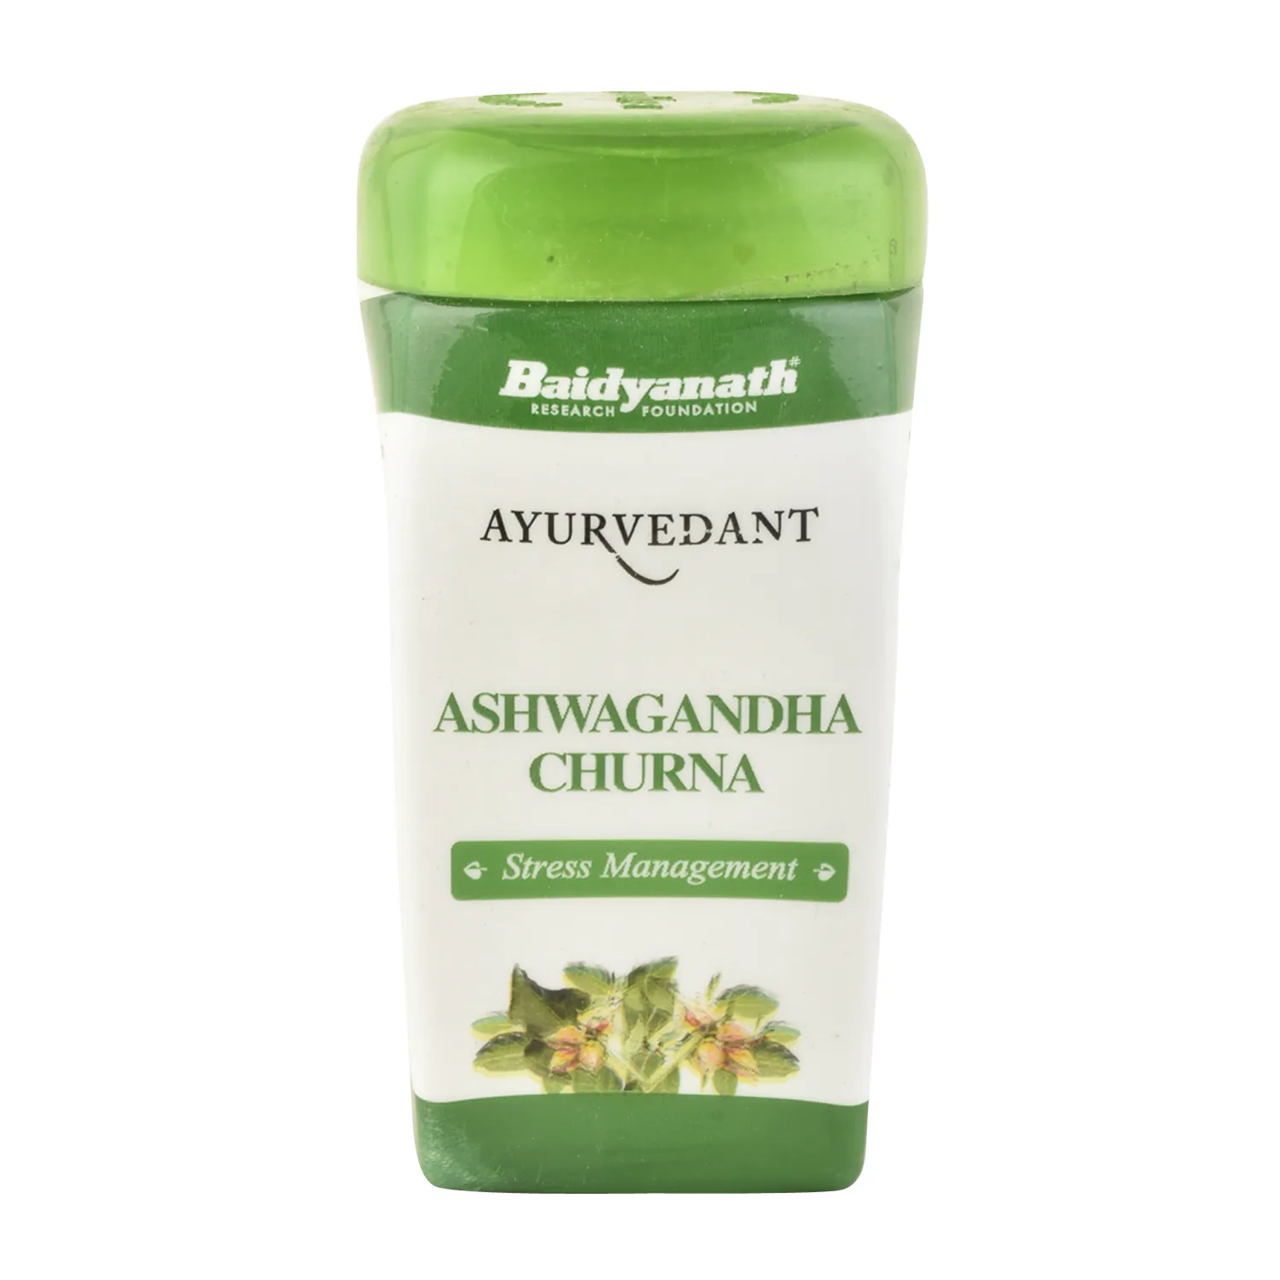 Picture of Baidyanath Ashwagandha Churna - Pack of 1 - 100 Grams